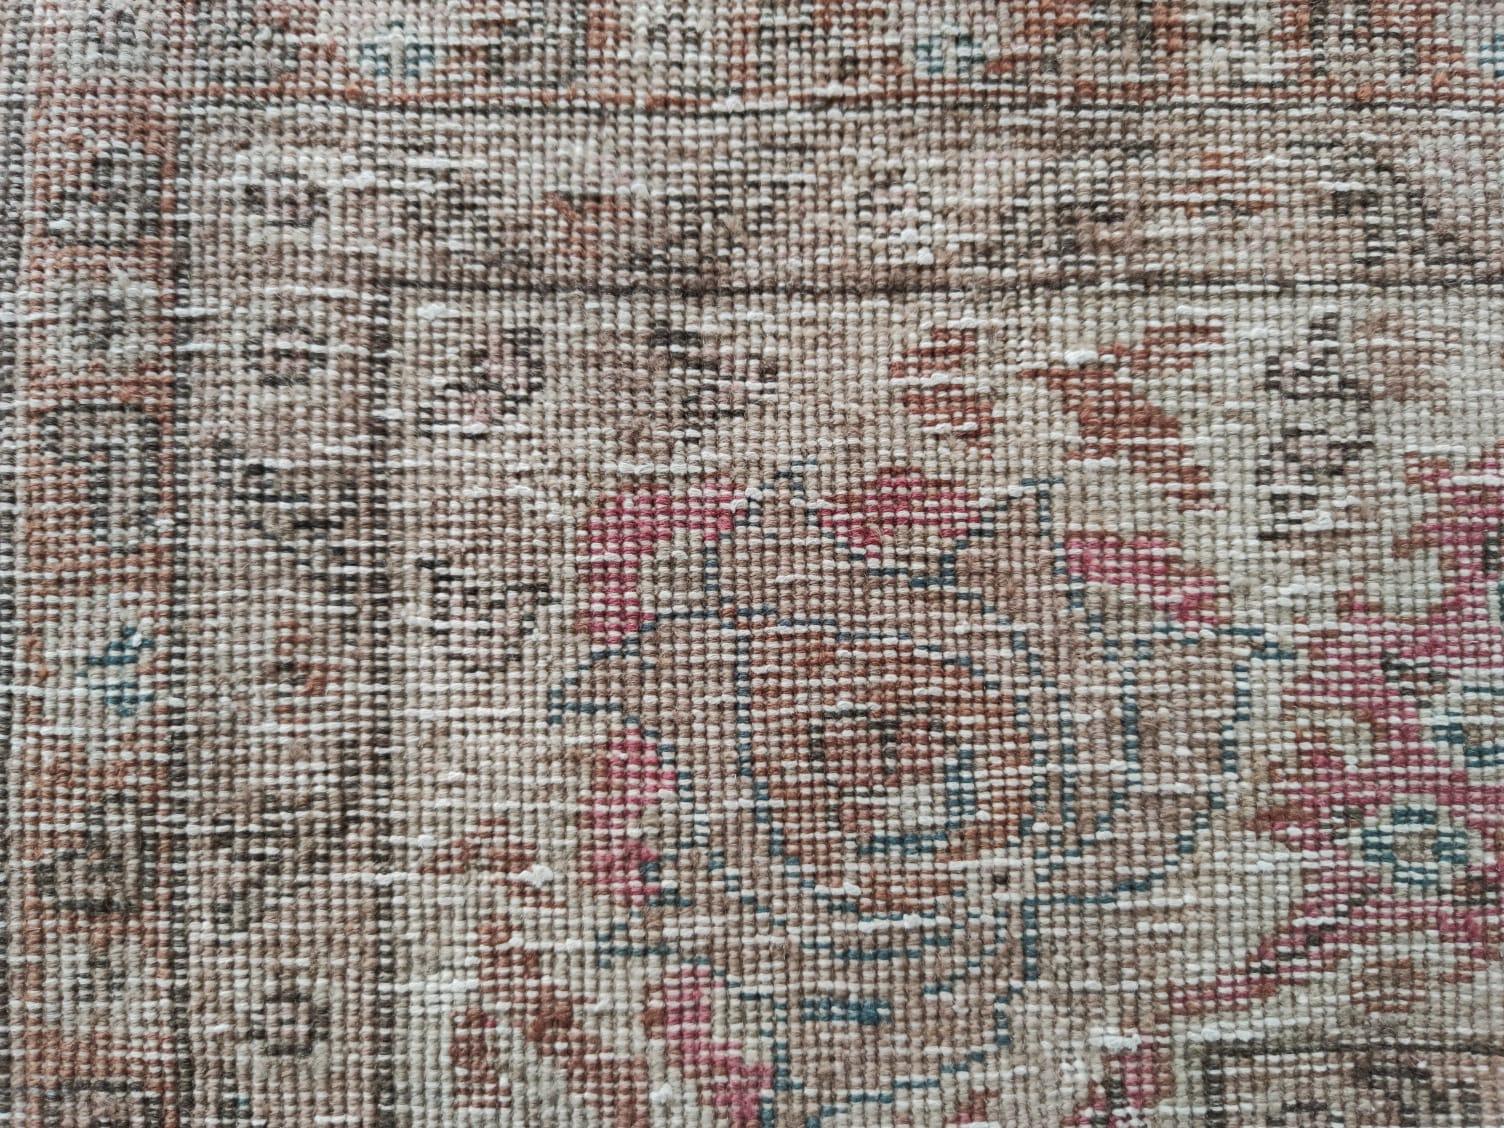 8.5x11 Ft Vintage Handmade Floral Pattern Turkish Wool Area Rug in Tawny Brown 2